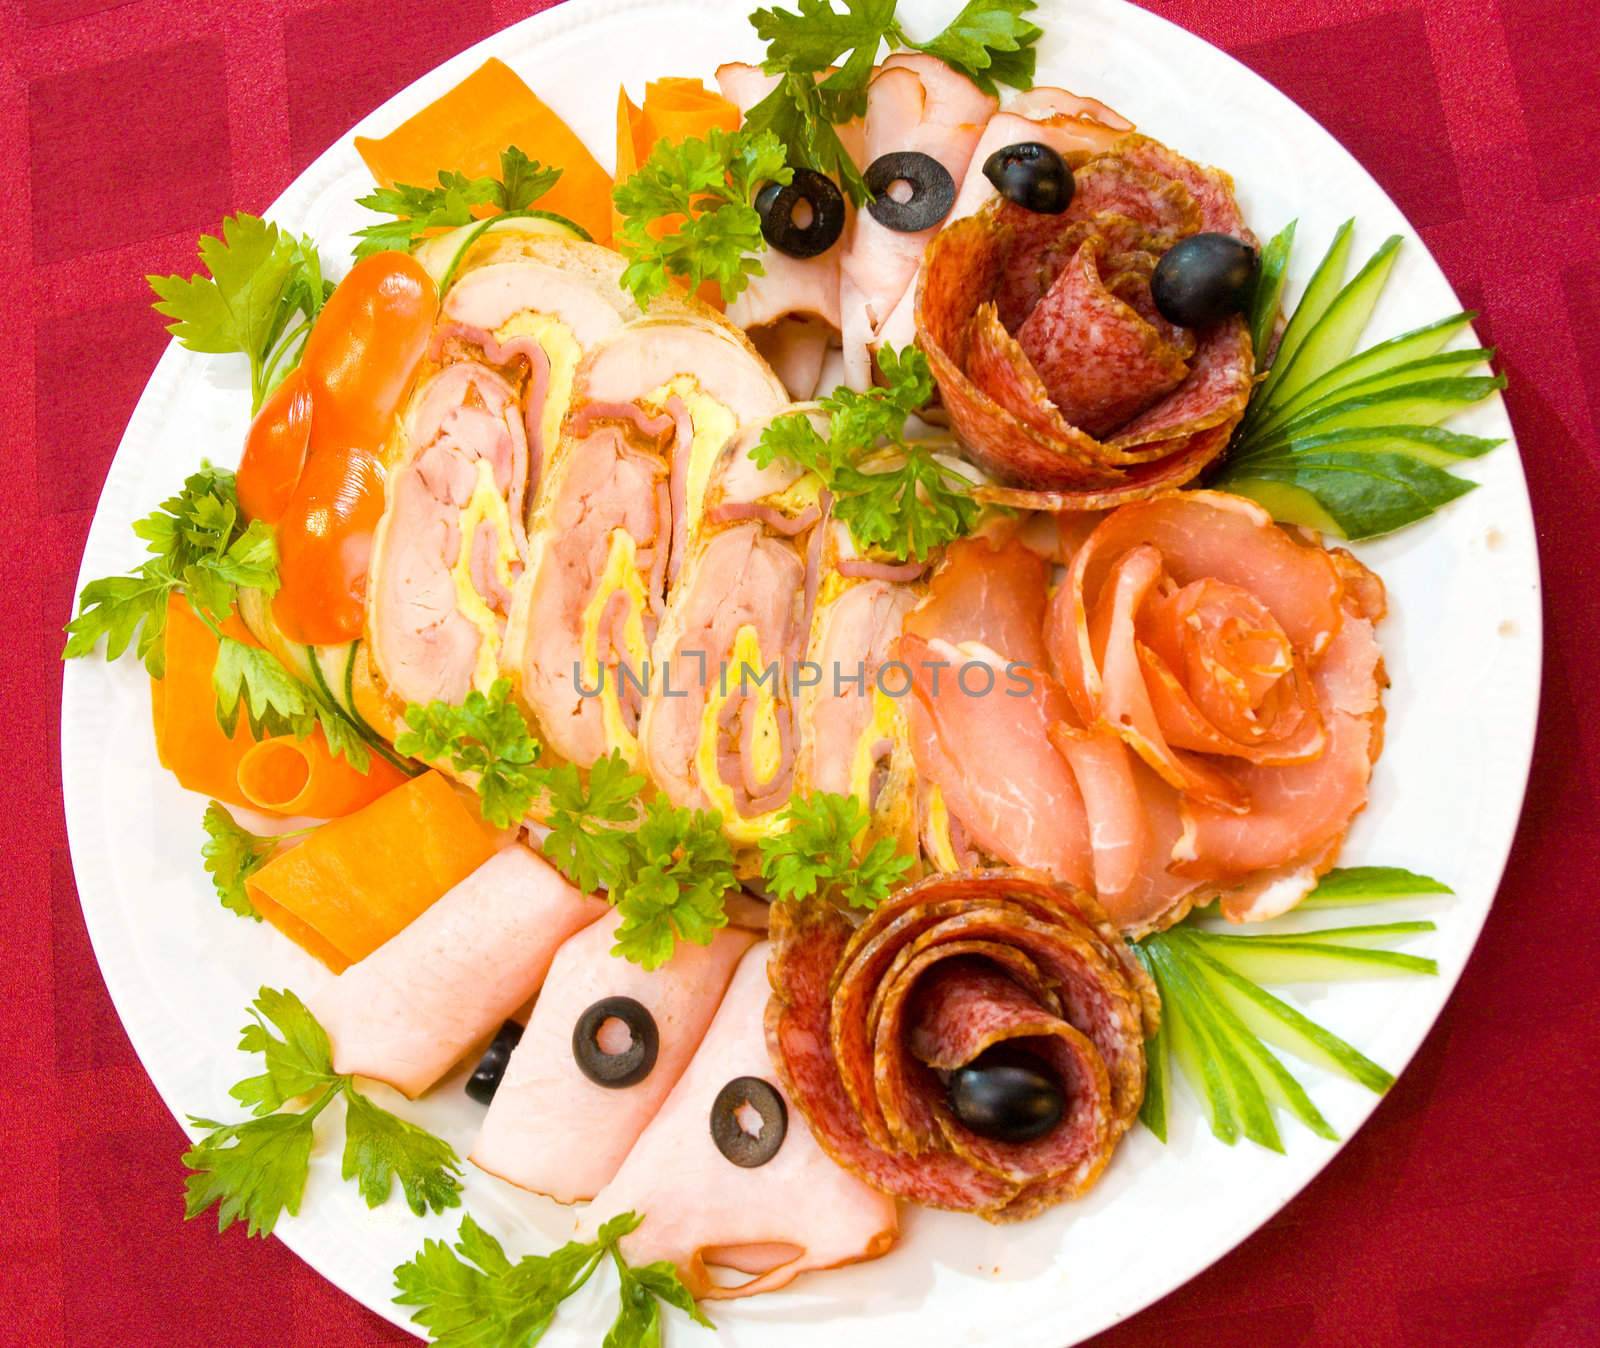 salami ham meat and more by semenovp